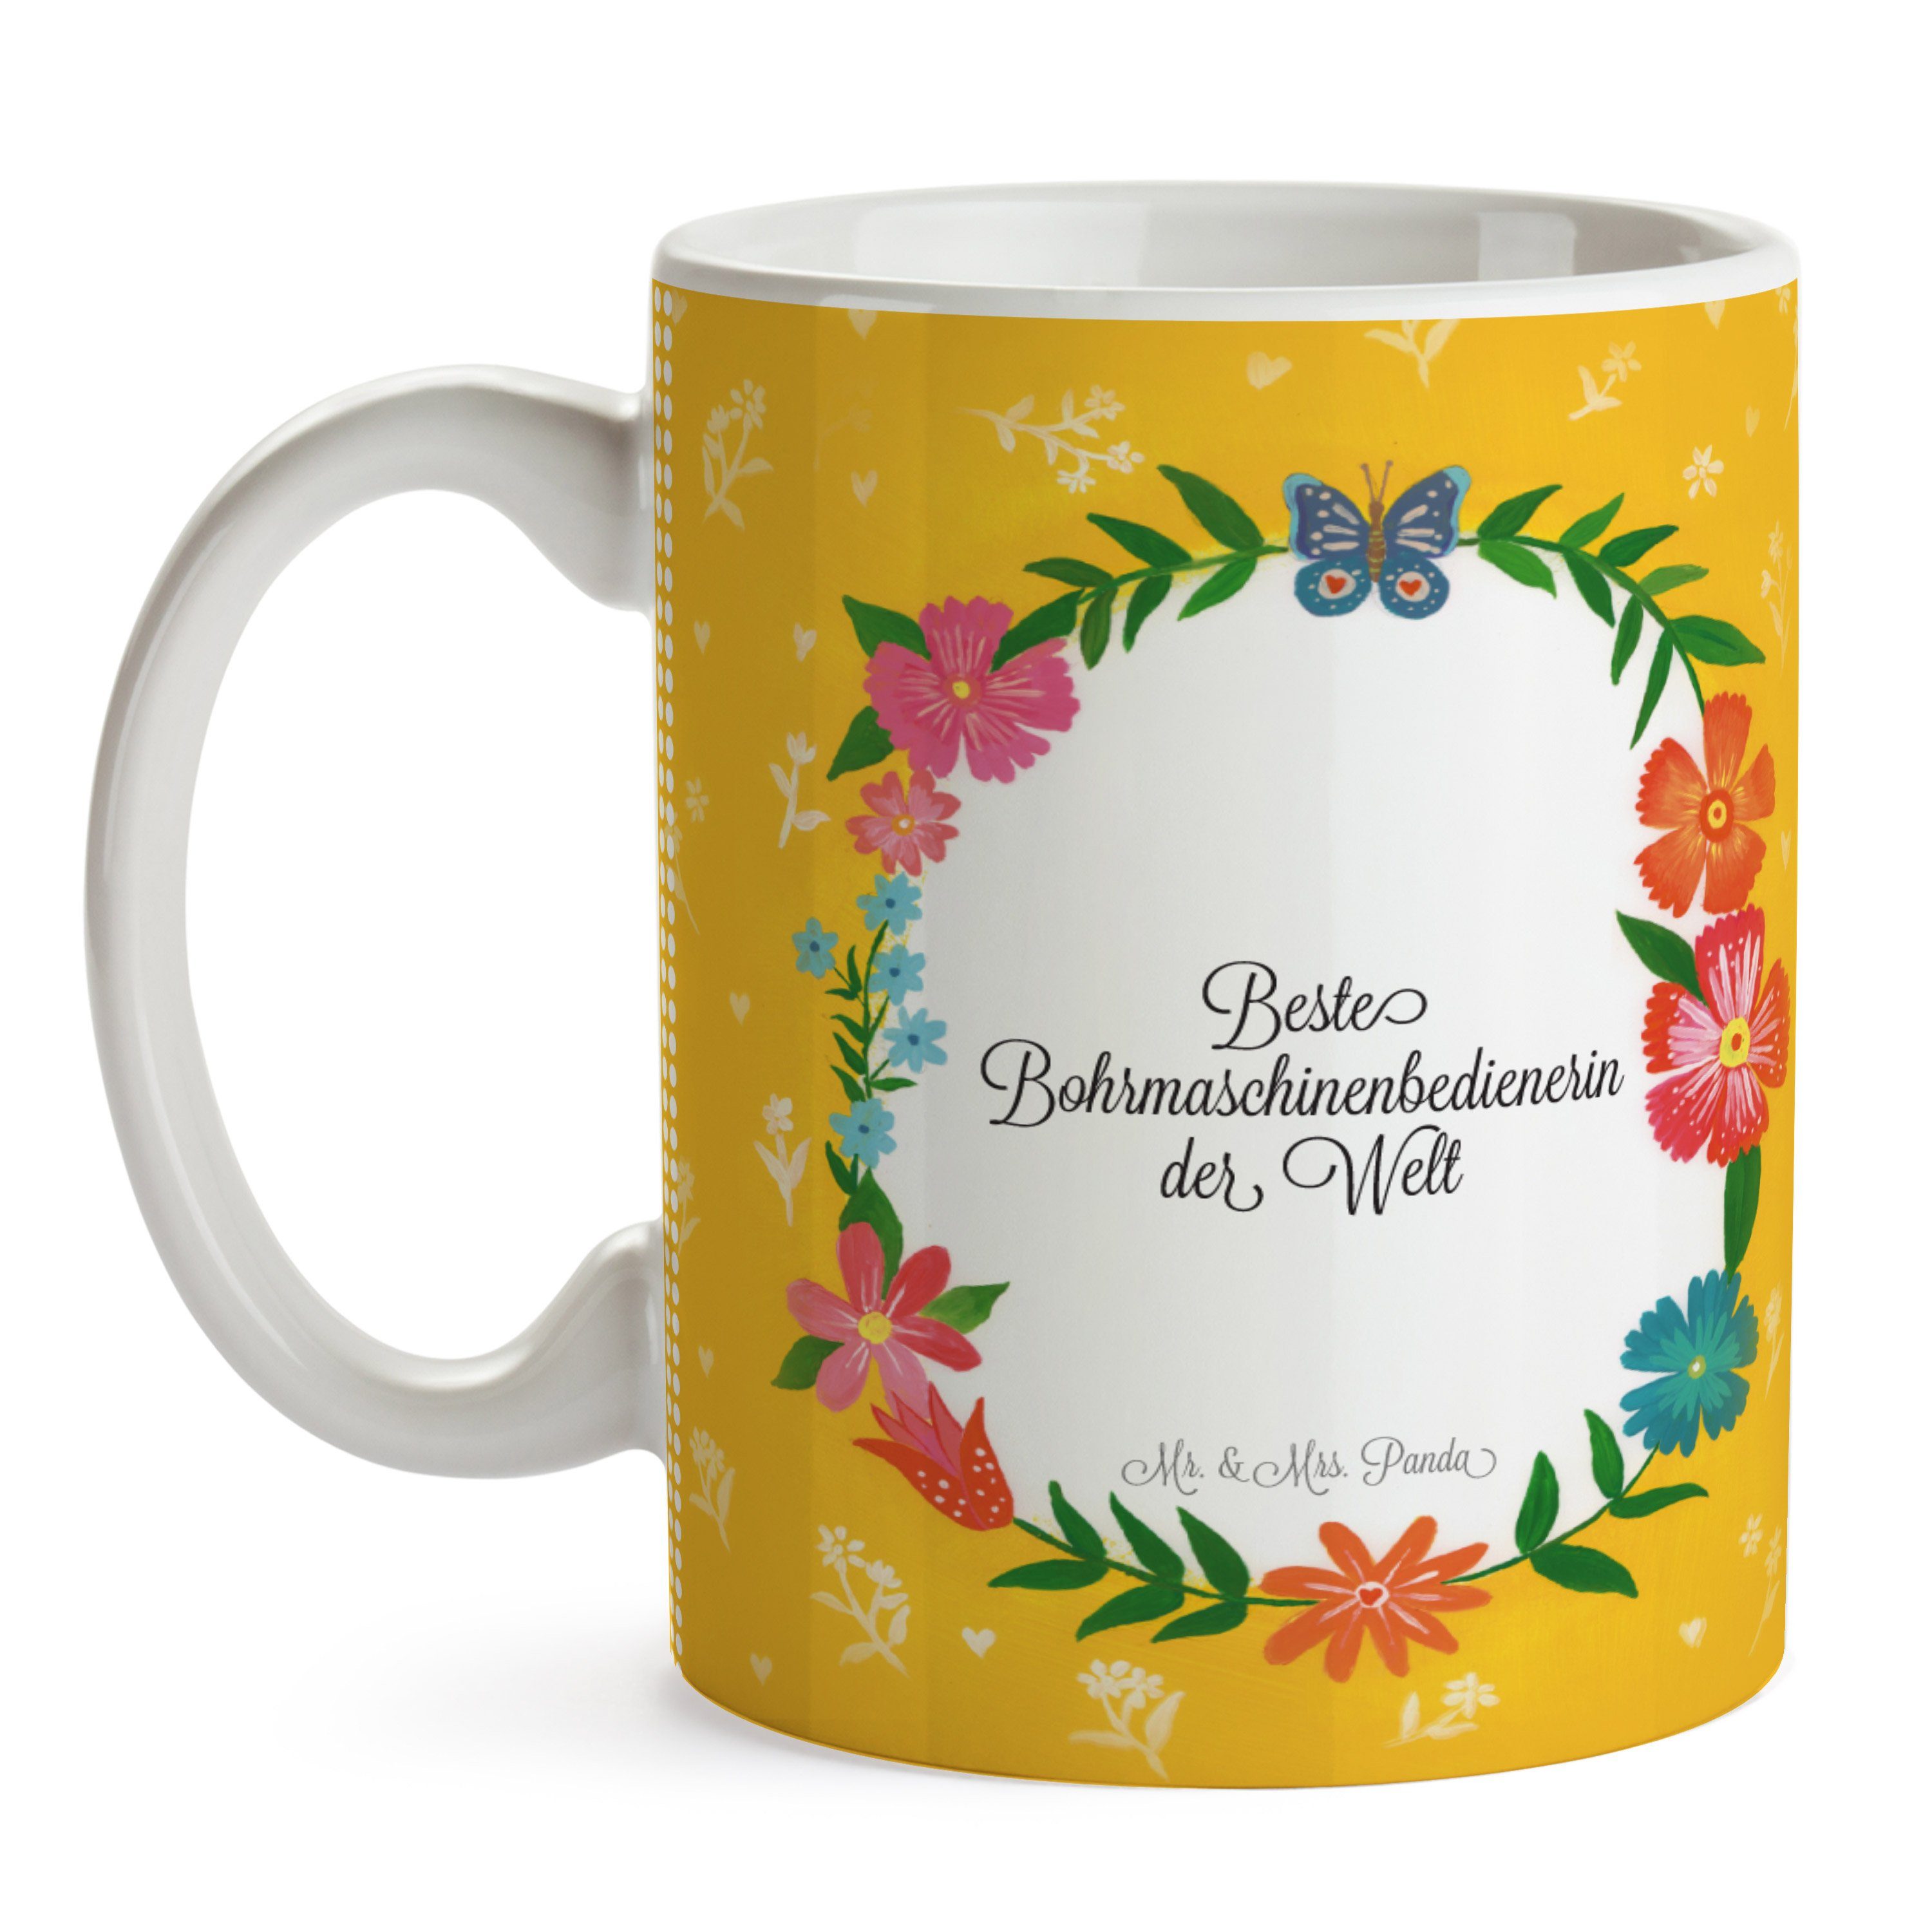 Geschenk, Keramik Geschenk Tasse, - Mrs. Bohrmaschinenbedienerin Tasse & Mr. Panda Kaffeebecher, Tas,